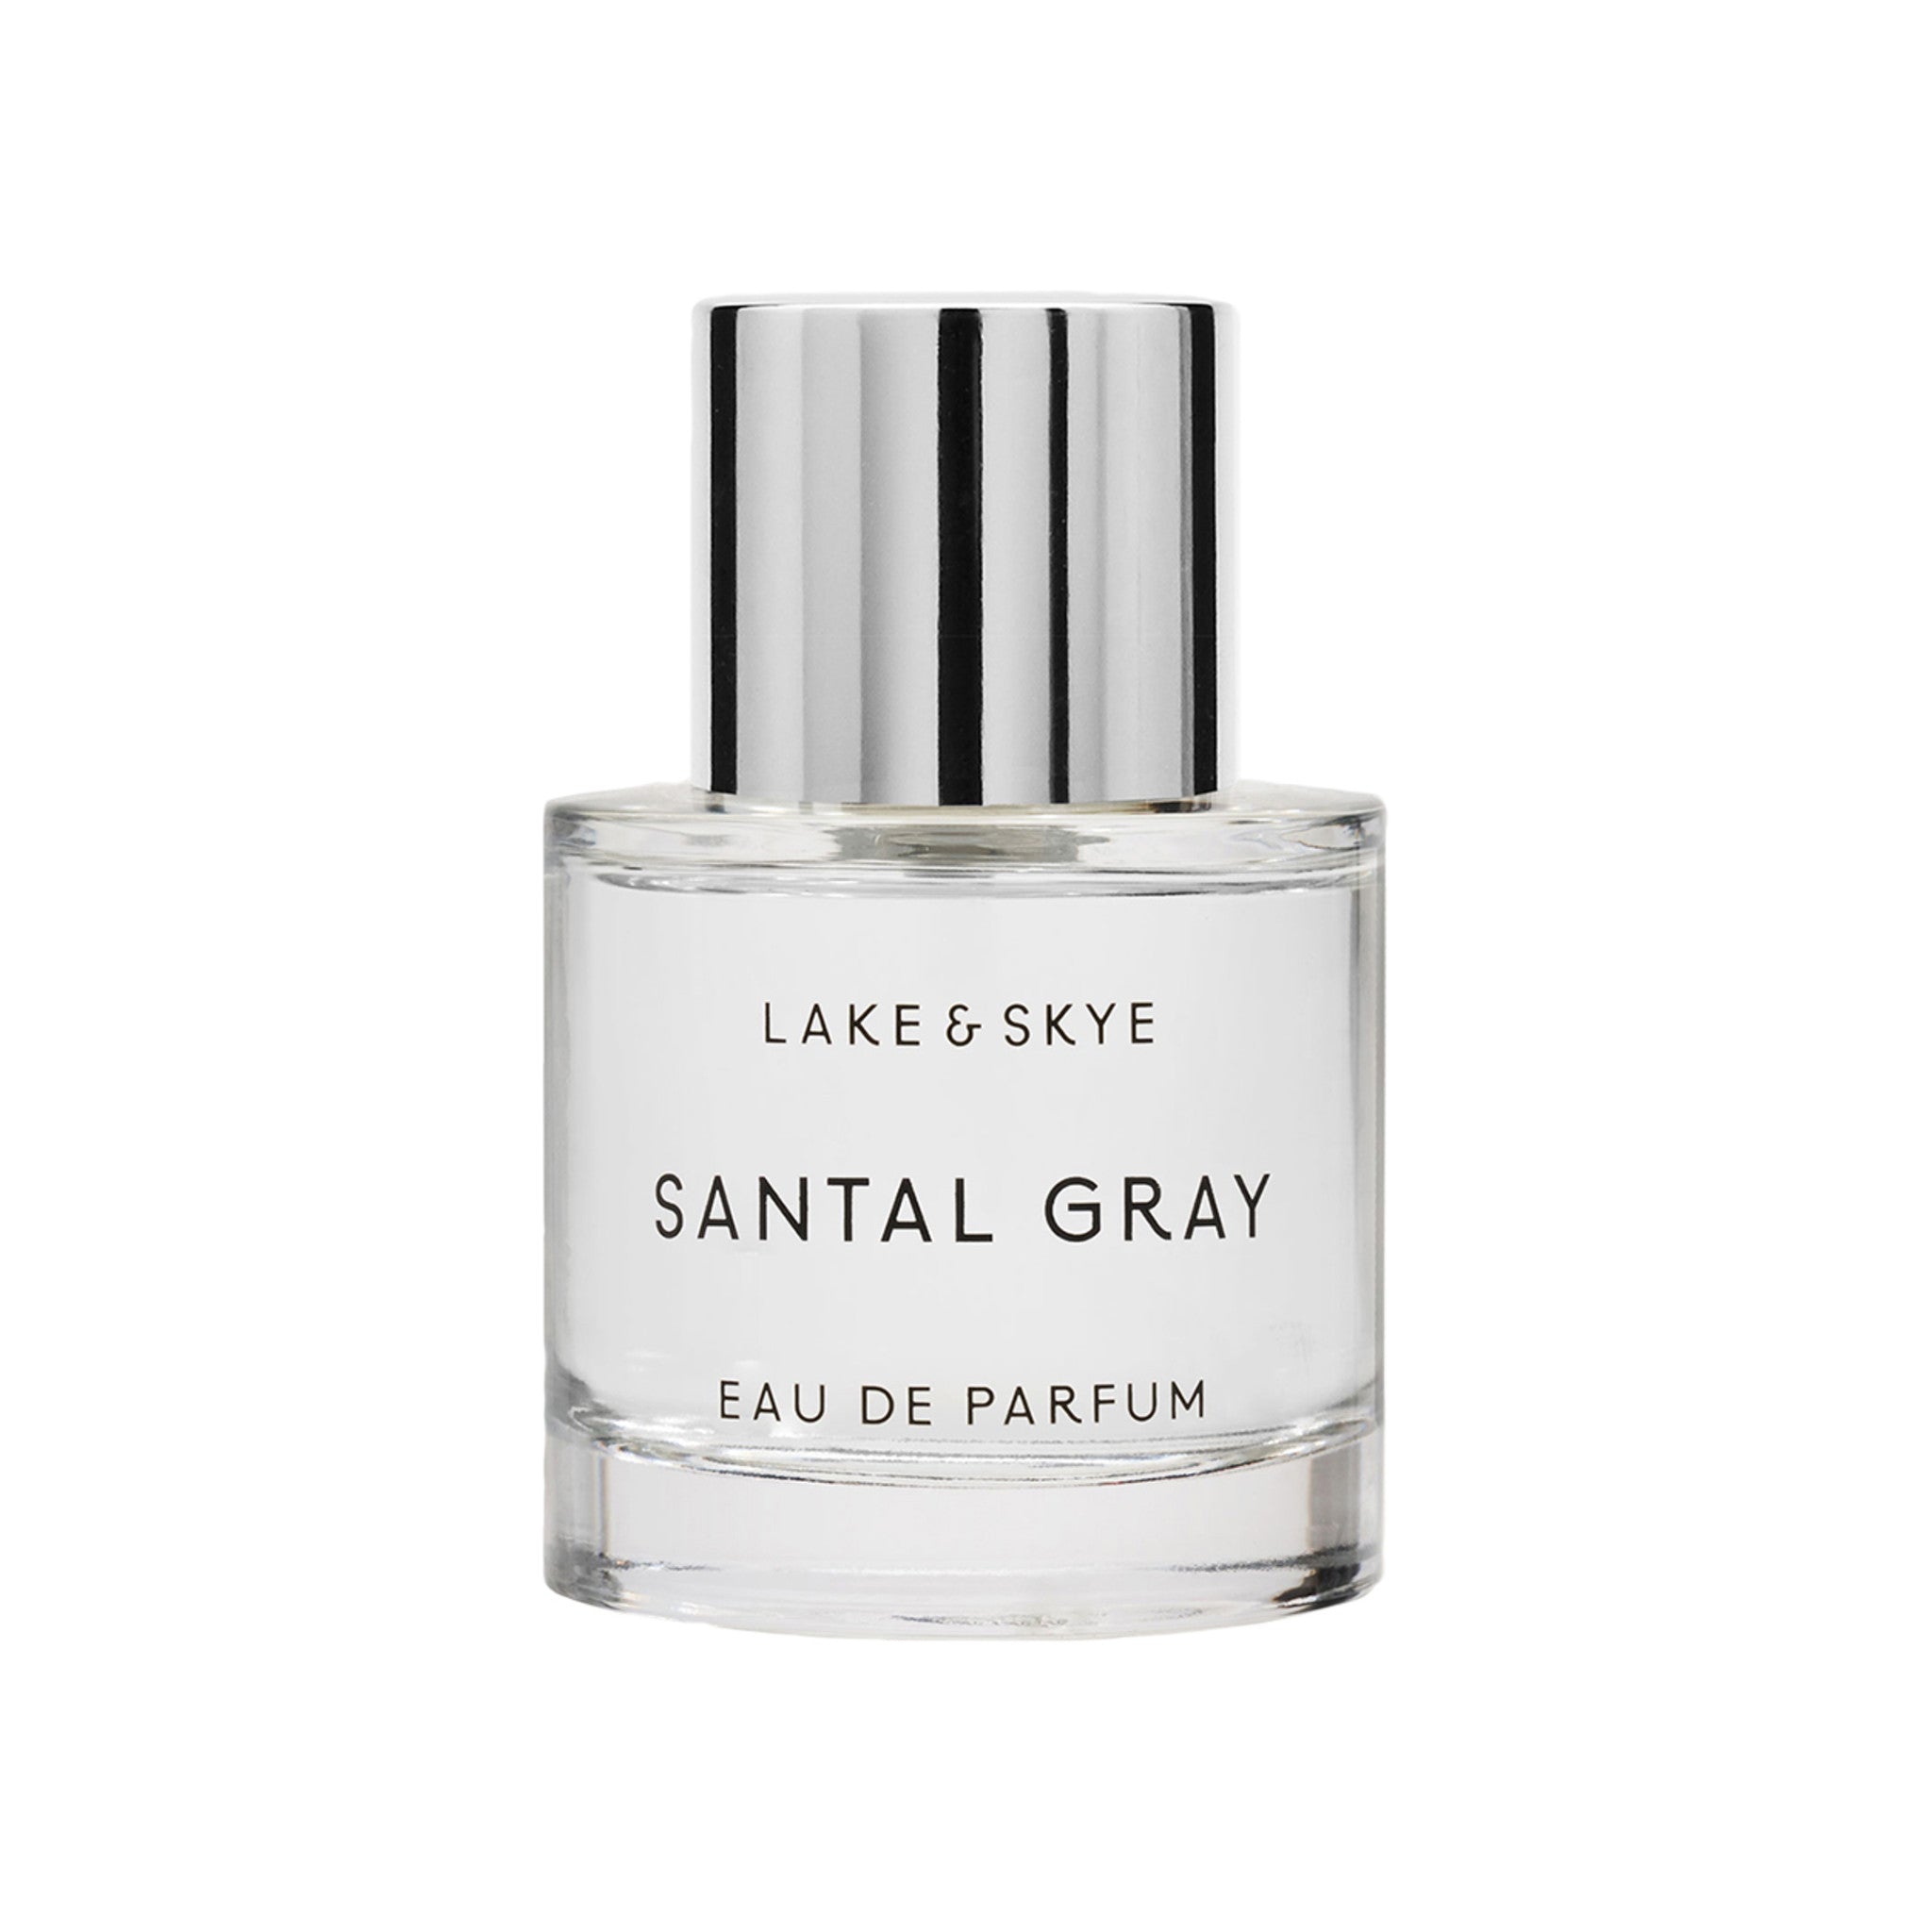 Lake & Skye Santal Gray Eau de Parfum Size variant: 1.7 fl oz | 50 ml main image.